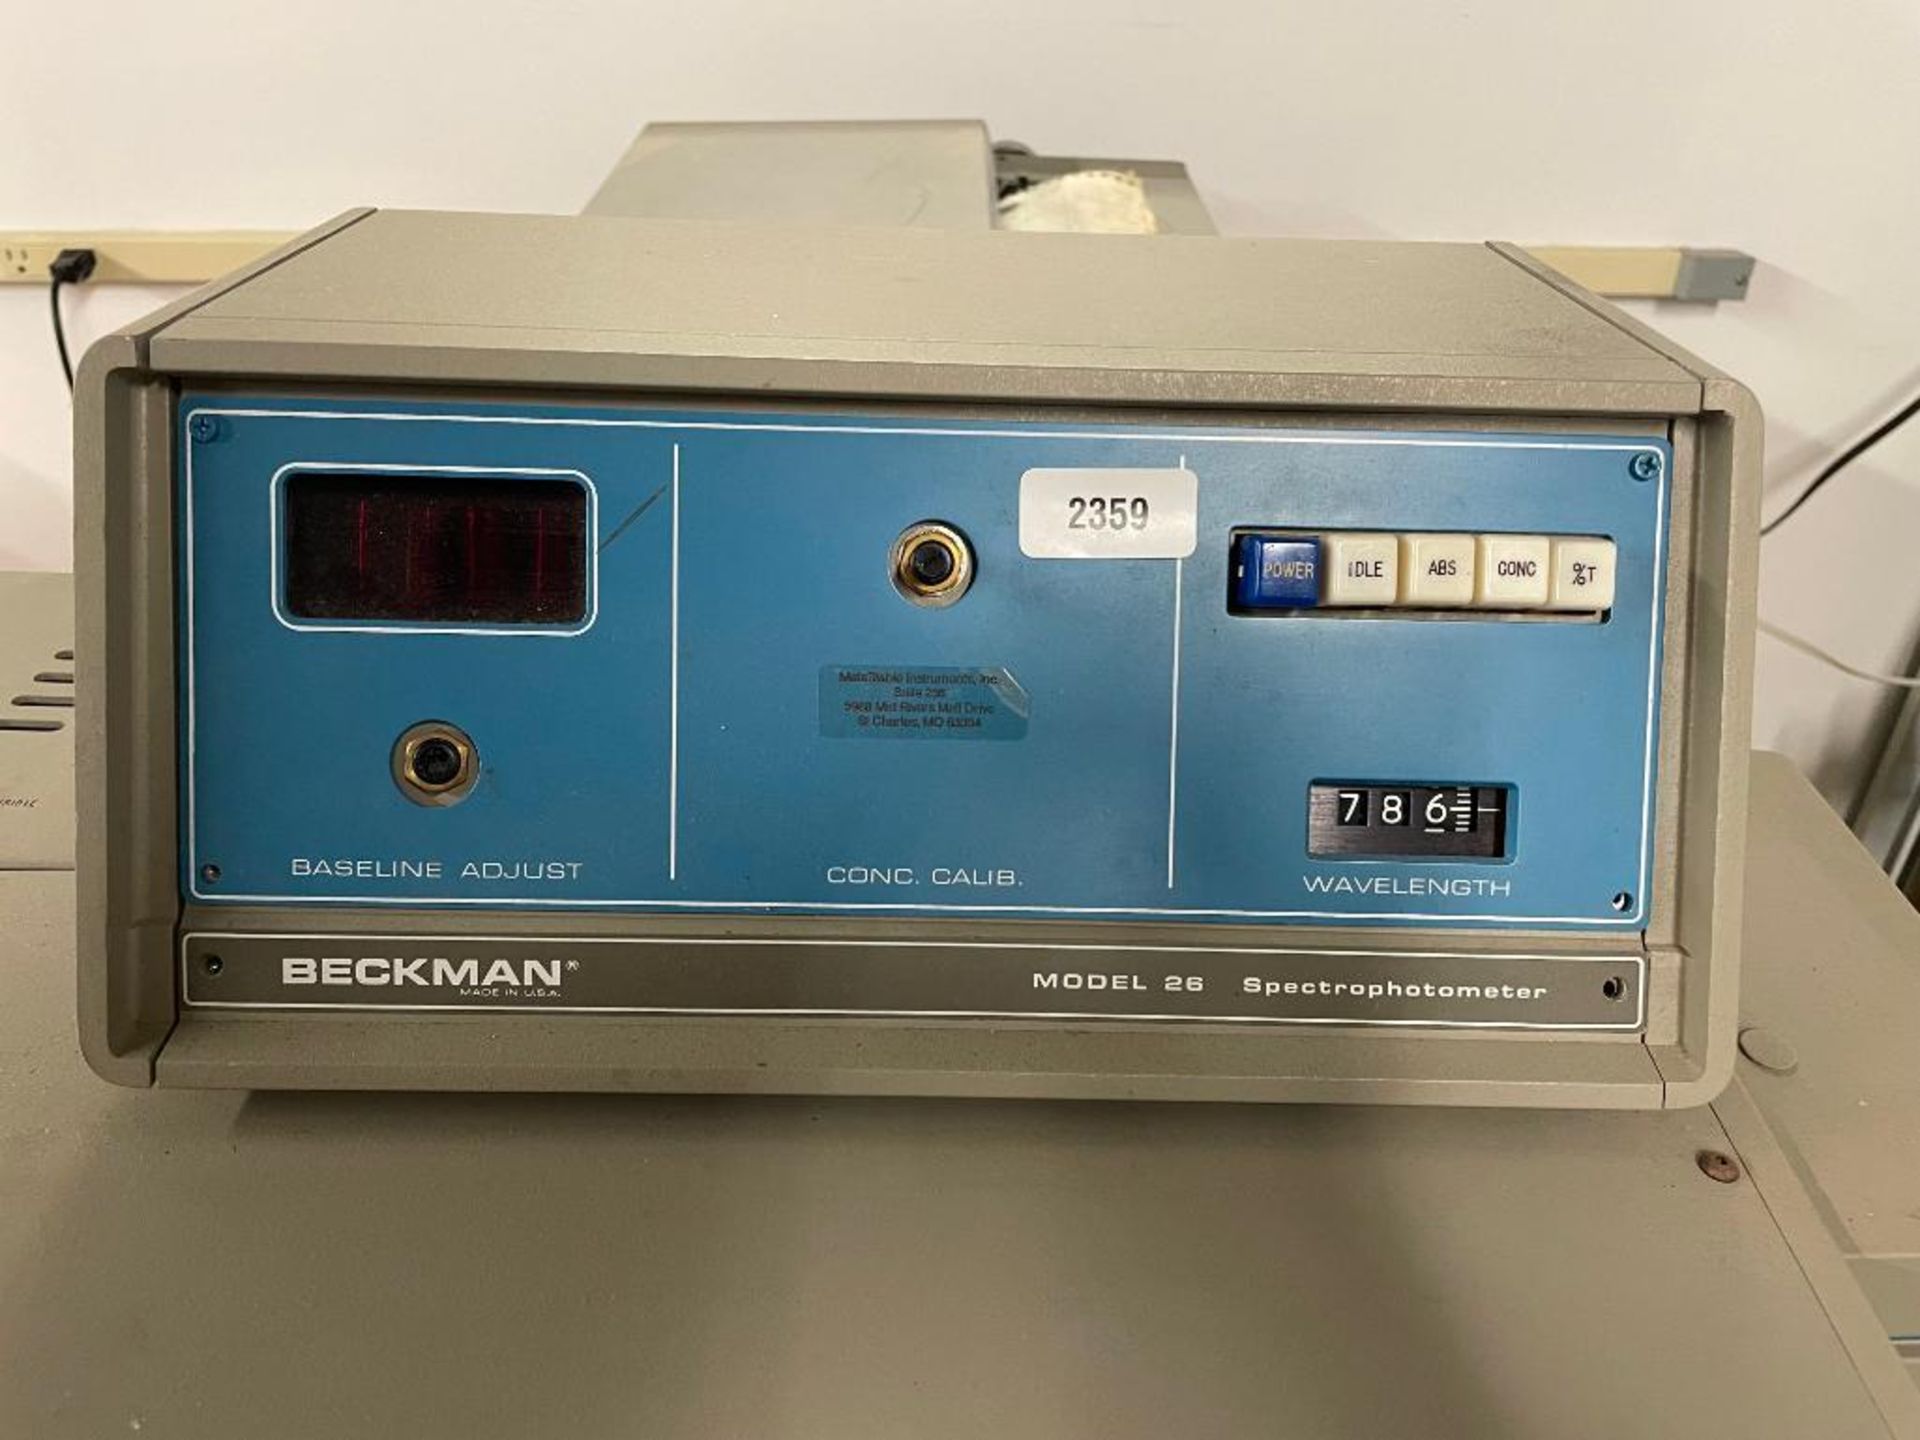 BECKMAN 26 UV SPECTROPHOTOMETER W/ RECORDER BRAND/MODEL: BECKMAN 26 QTY: 1 - Image 10 of 17